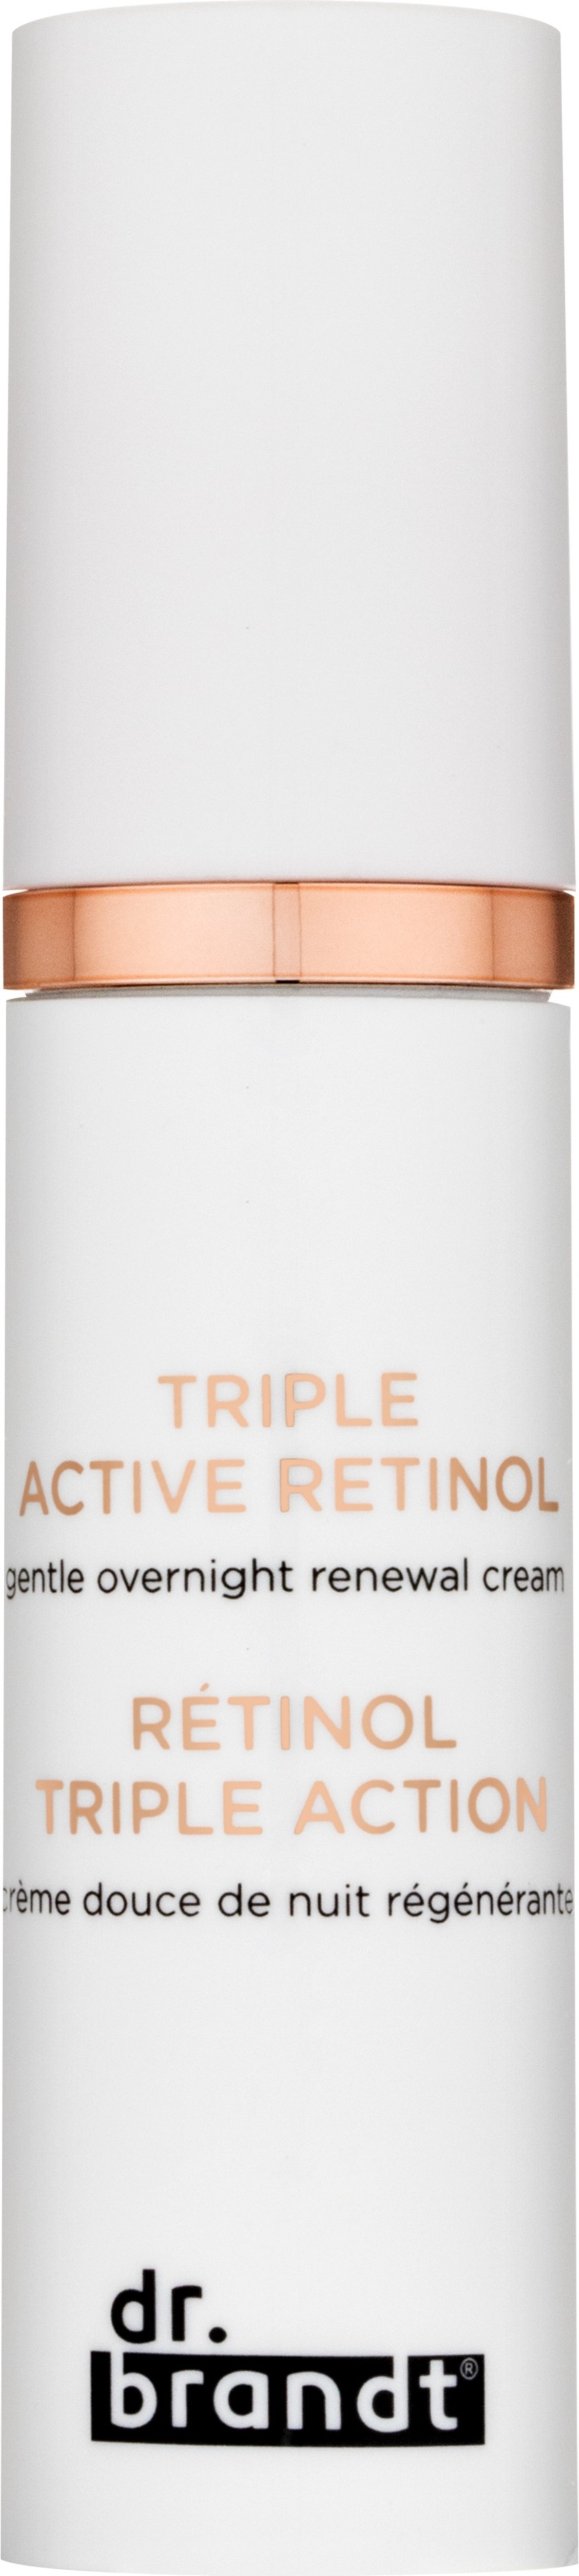 Dr. Brandt Triple Active Retinol gentle overnight renewal cream 3